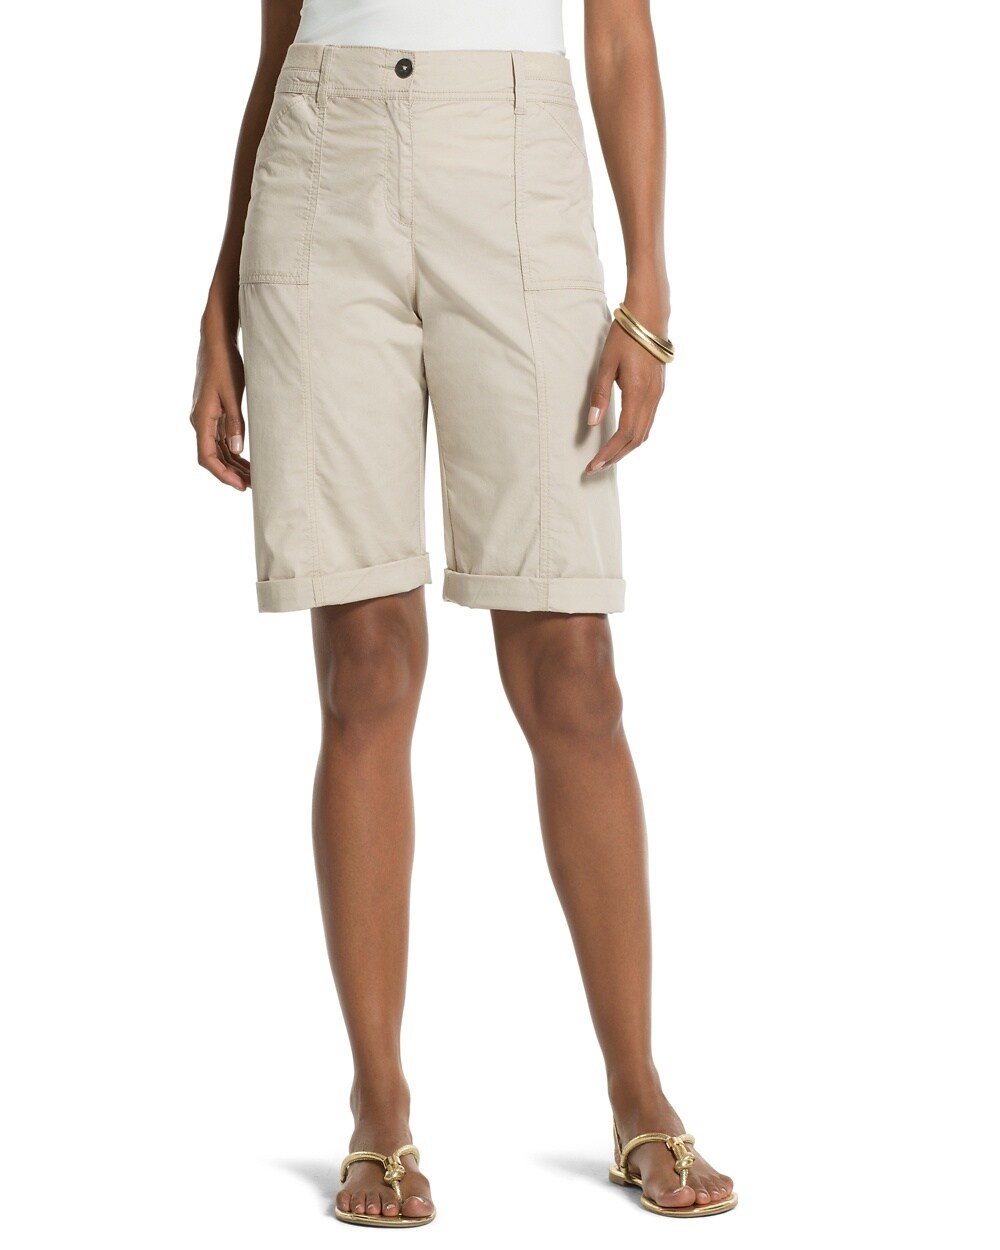 Cool Cotton Shorts - 11-inch inseam